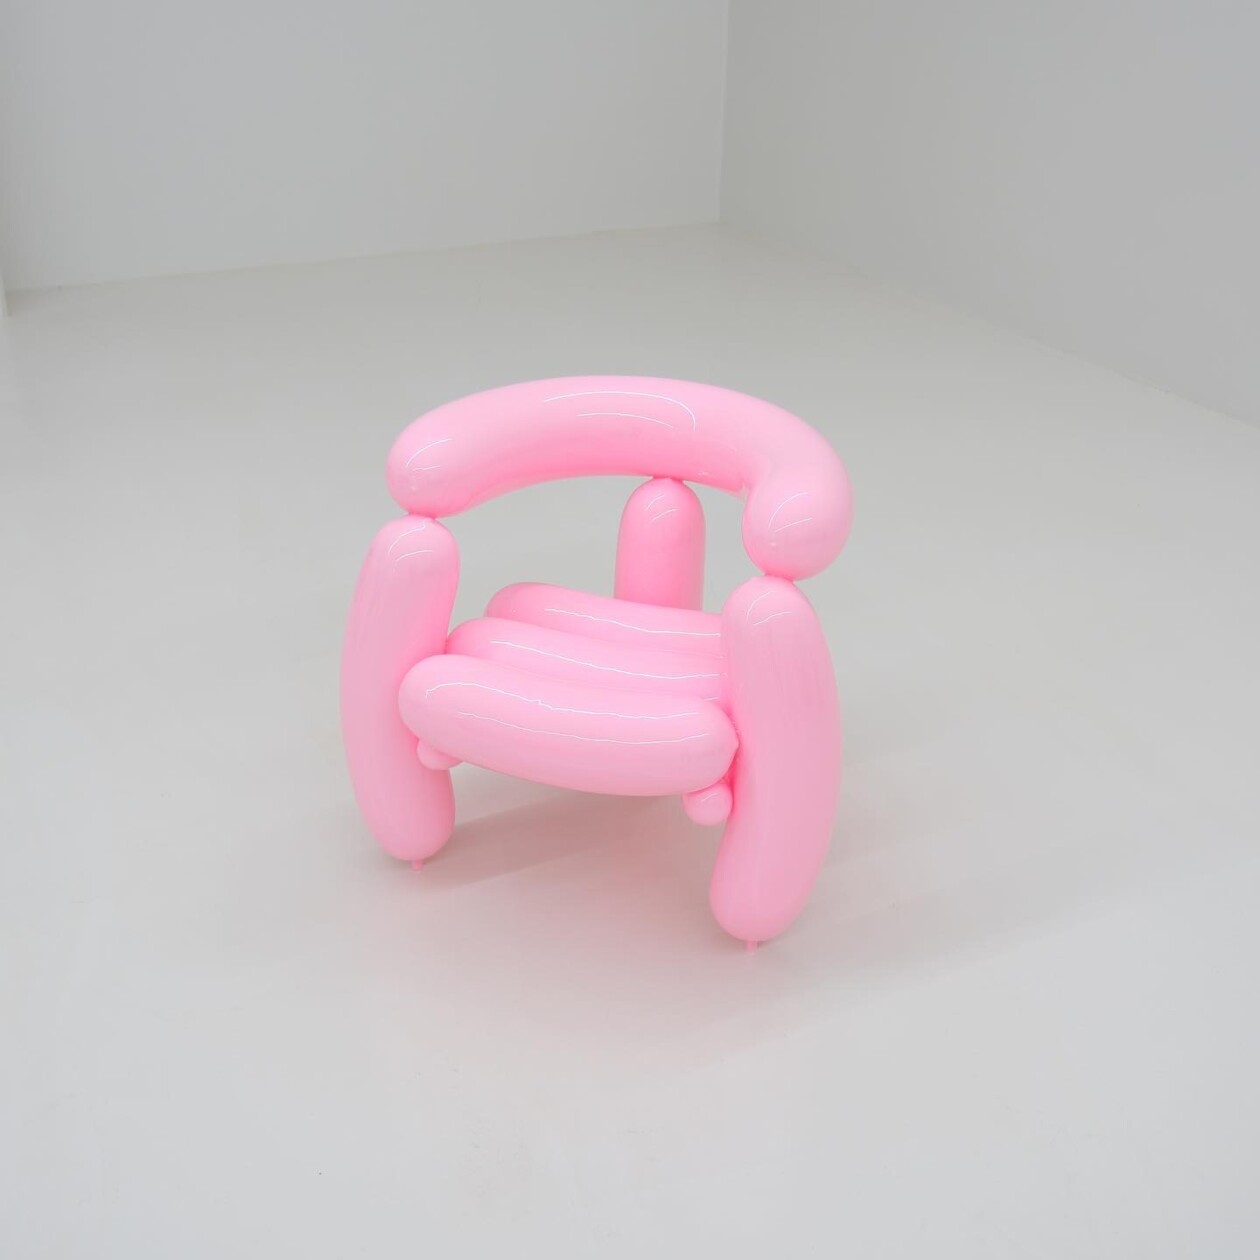 The Amusing Balloon Shaped Furniture Of Korean Artist And Designer Seungjin Yang (14)